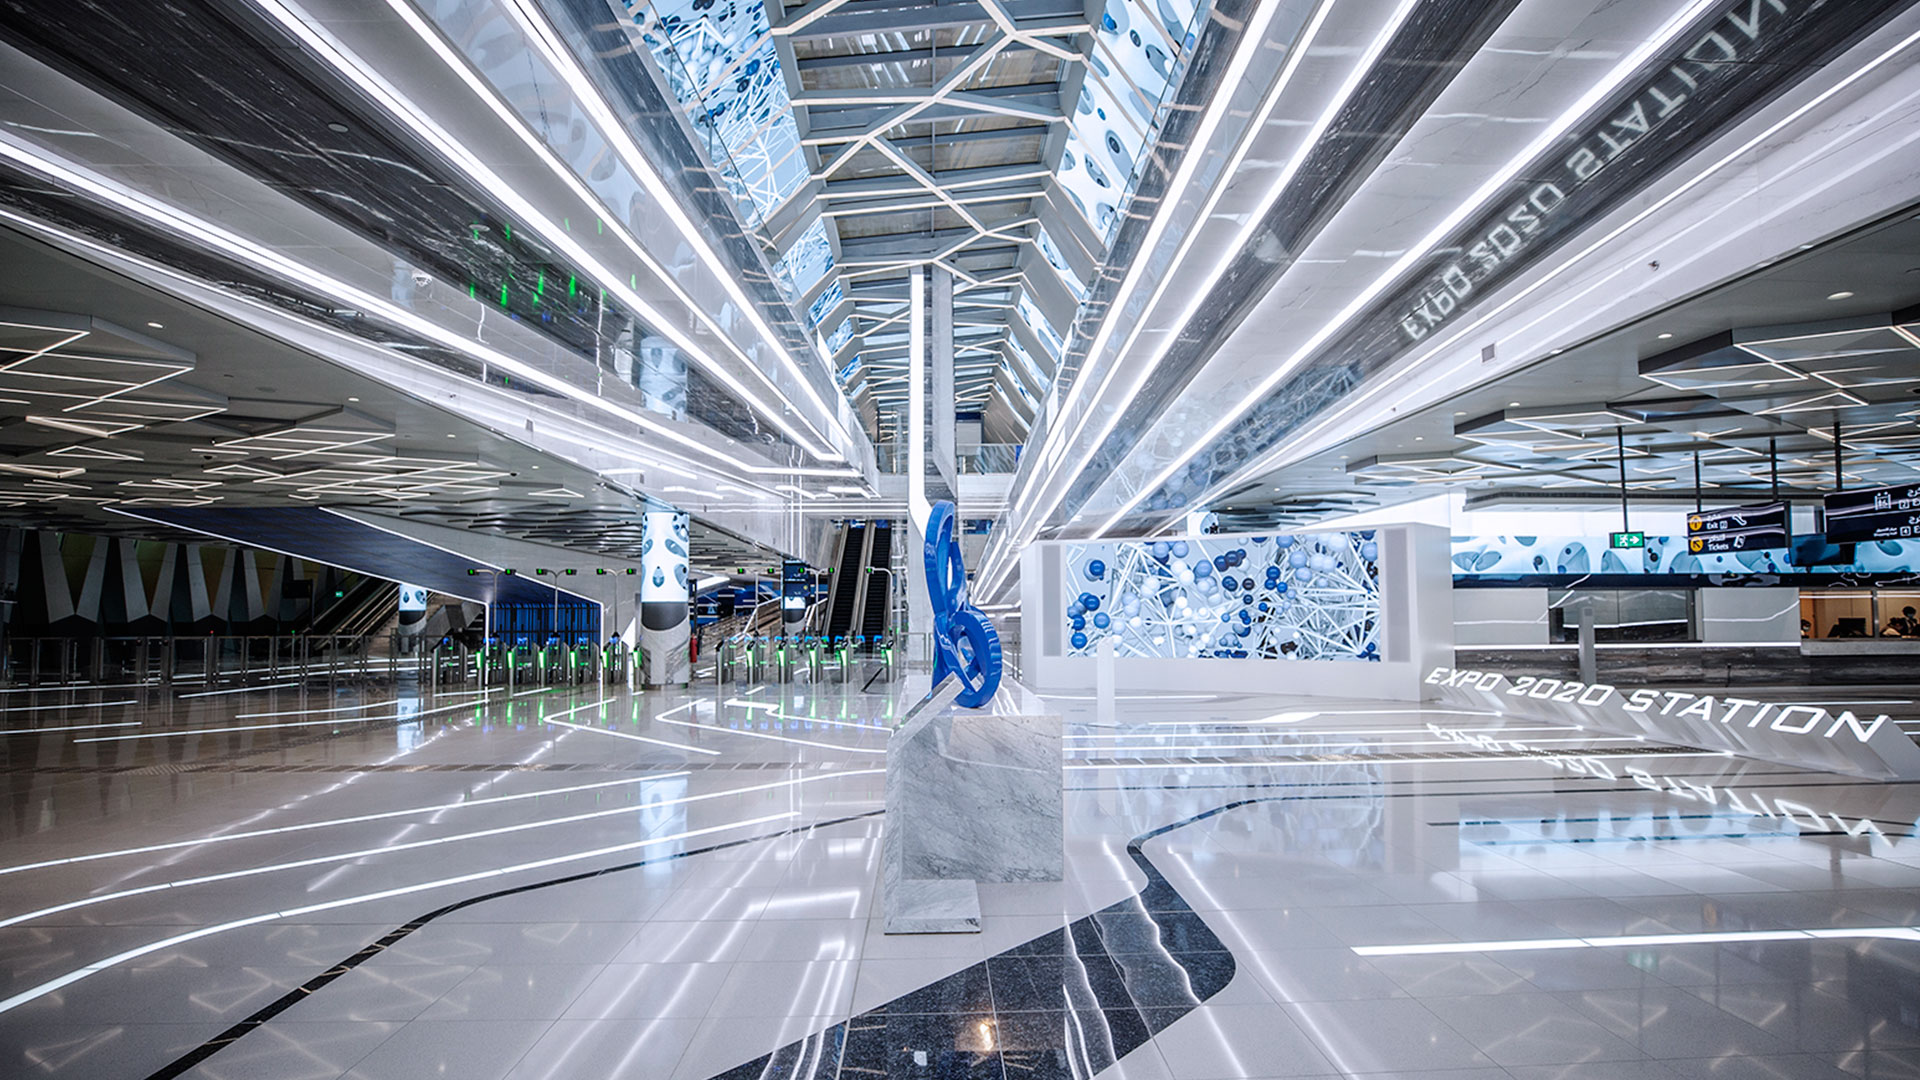 EXPO 2020 Metro Station Dubai  by Hotaru Visual Guerrilla - Creative Work - $i